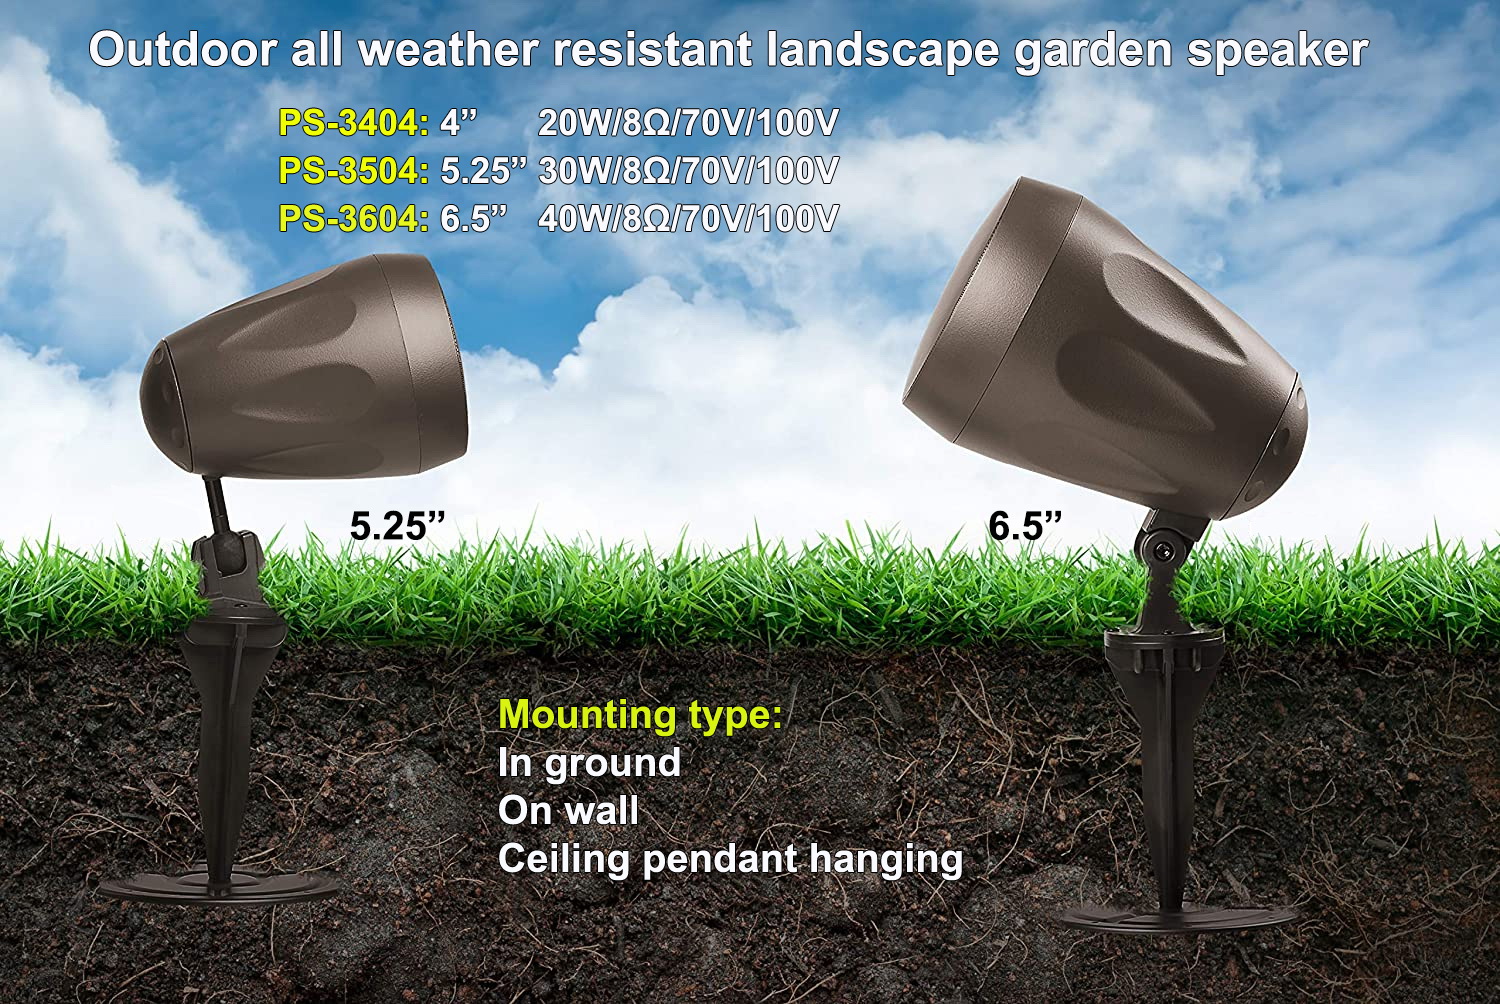 Hot sell: outdoor weather resistant landscape garden speaker: PS-3404 series